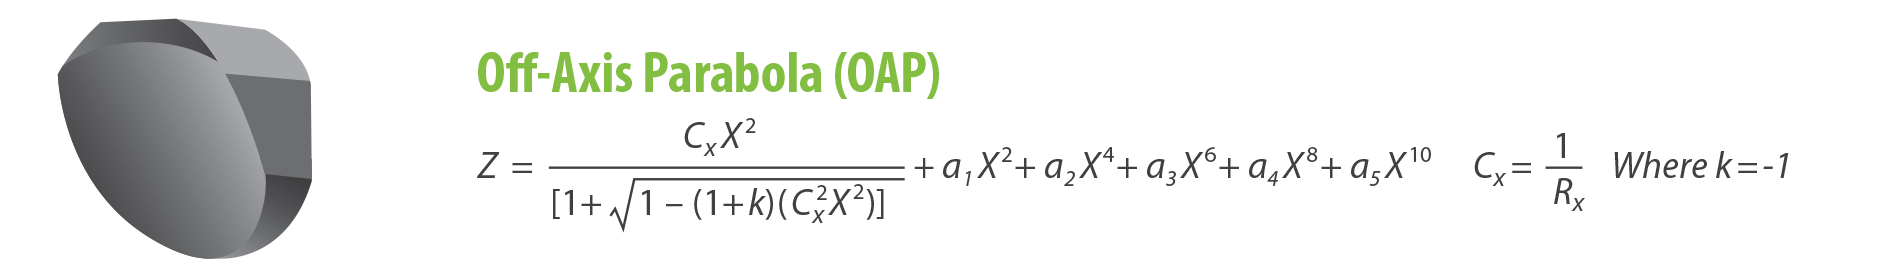 OAP formula